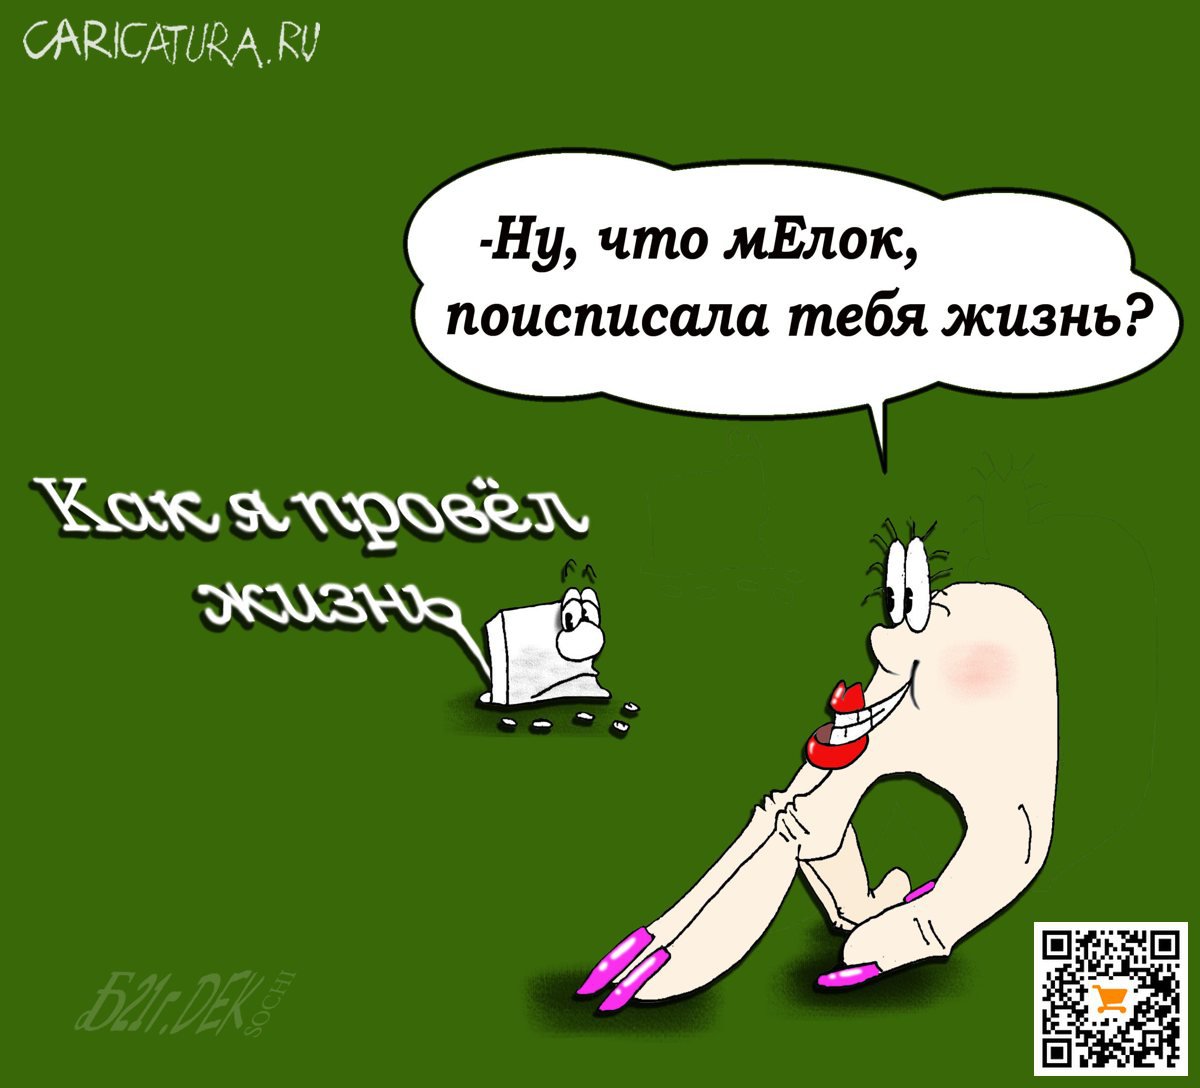 Карикатура "ПроСписанную жизнь", Борис Демин